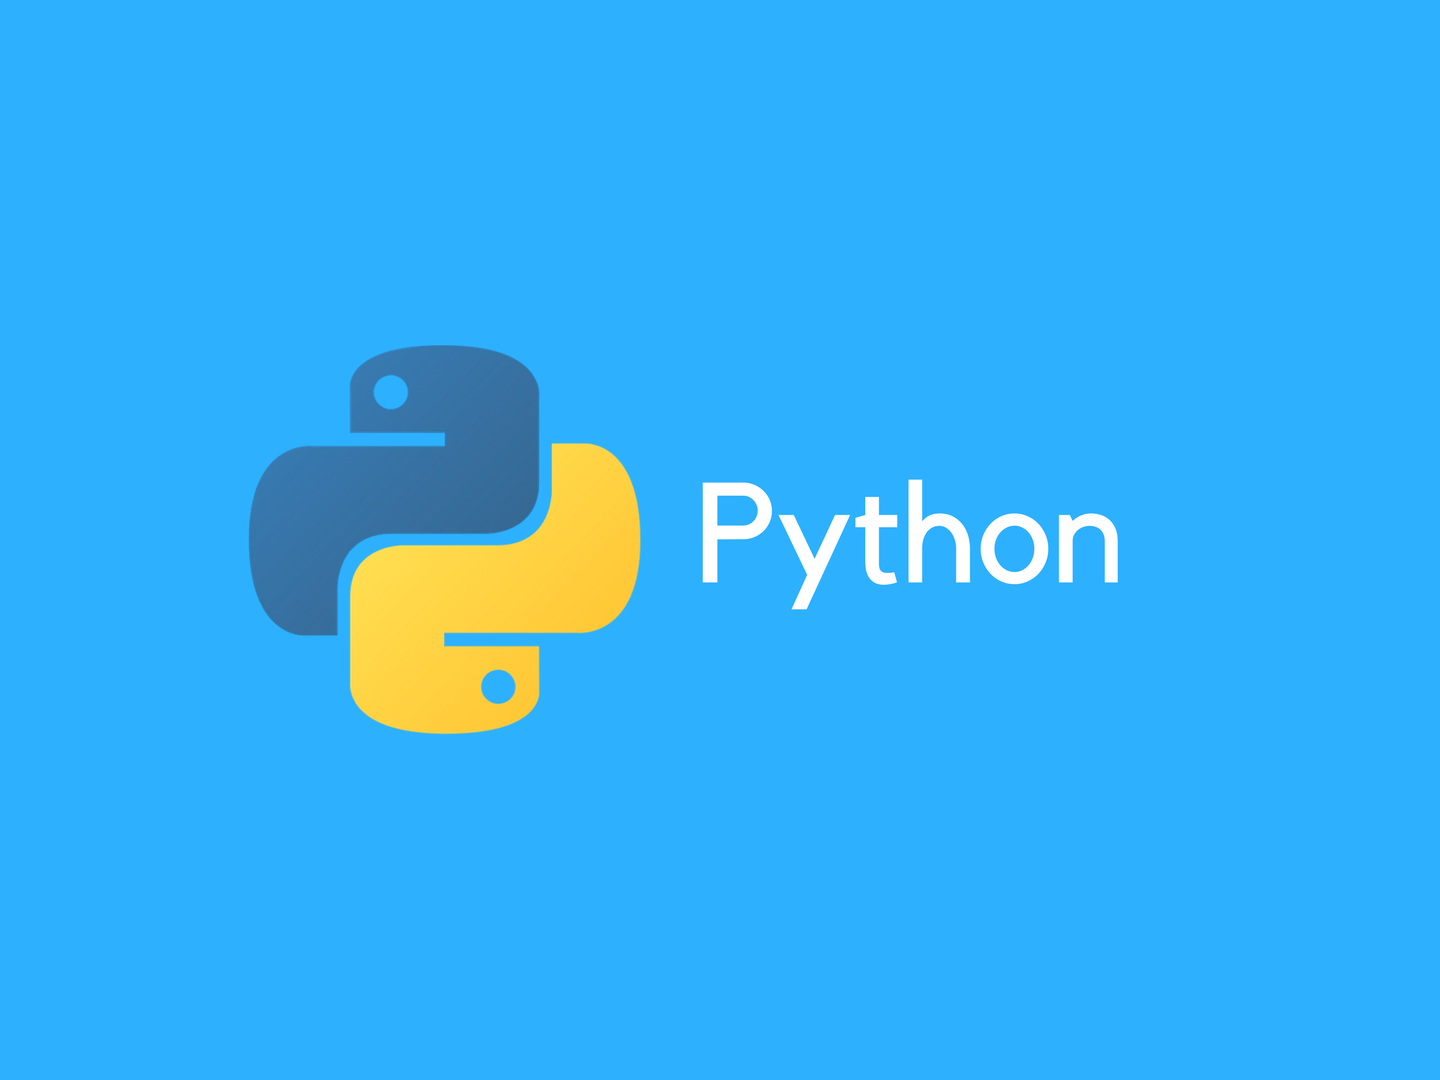 Python 3 doc. Python. Питон программирование. Python картинки. Пион язык программирования.